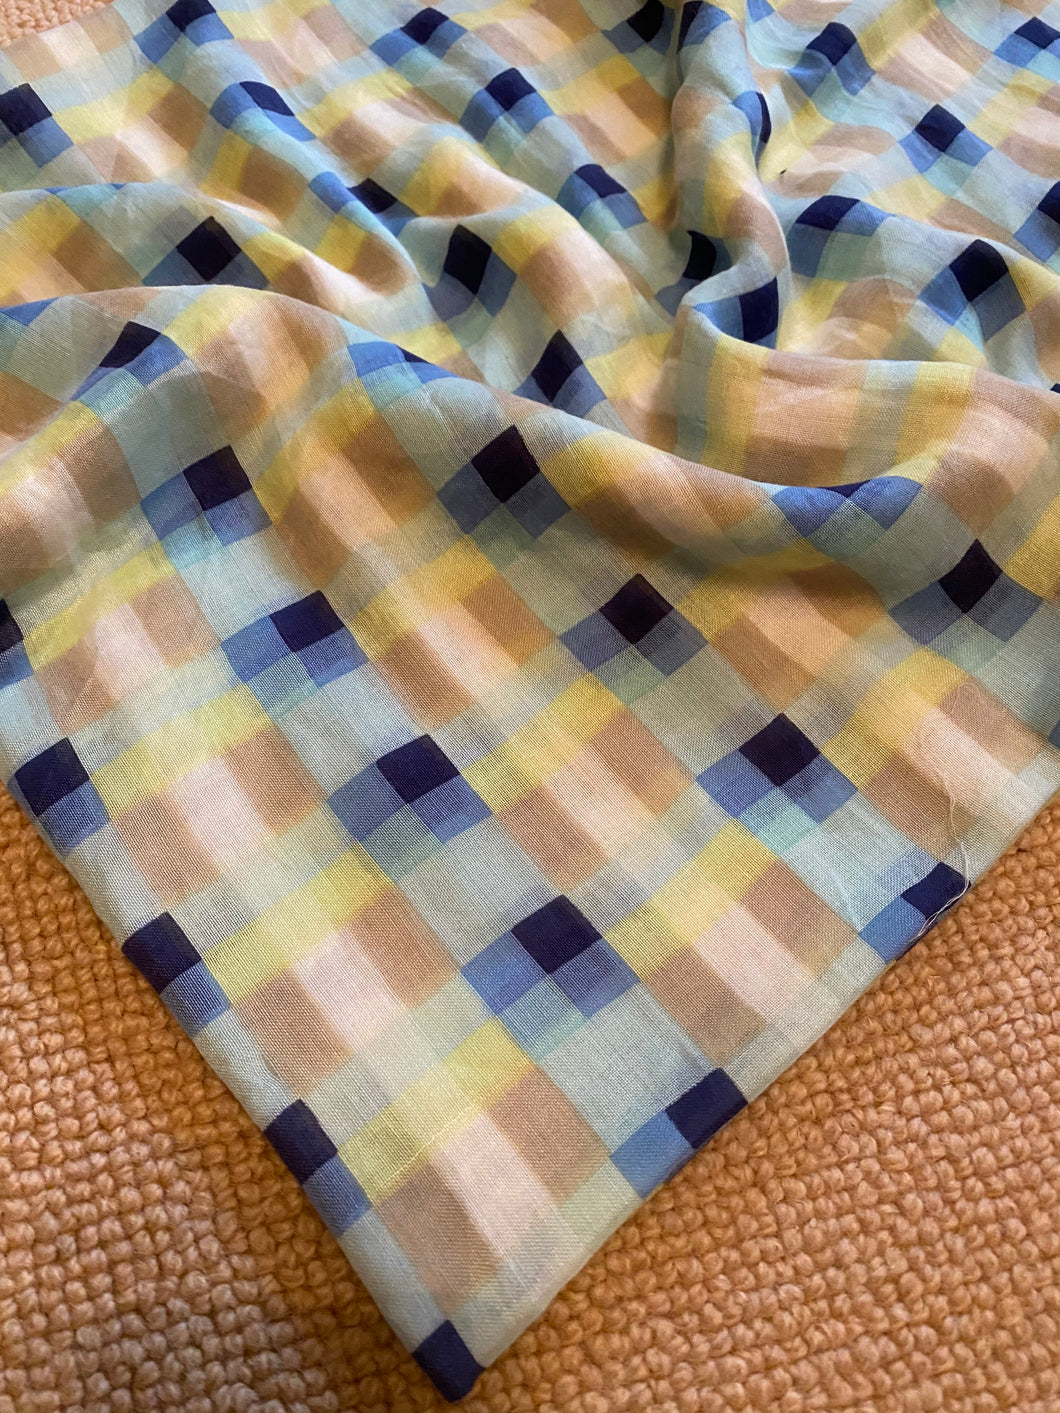 SU123 Small checked sarong or scarf in primrose, blue, mushroom